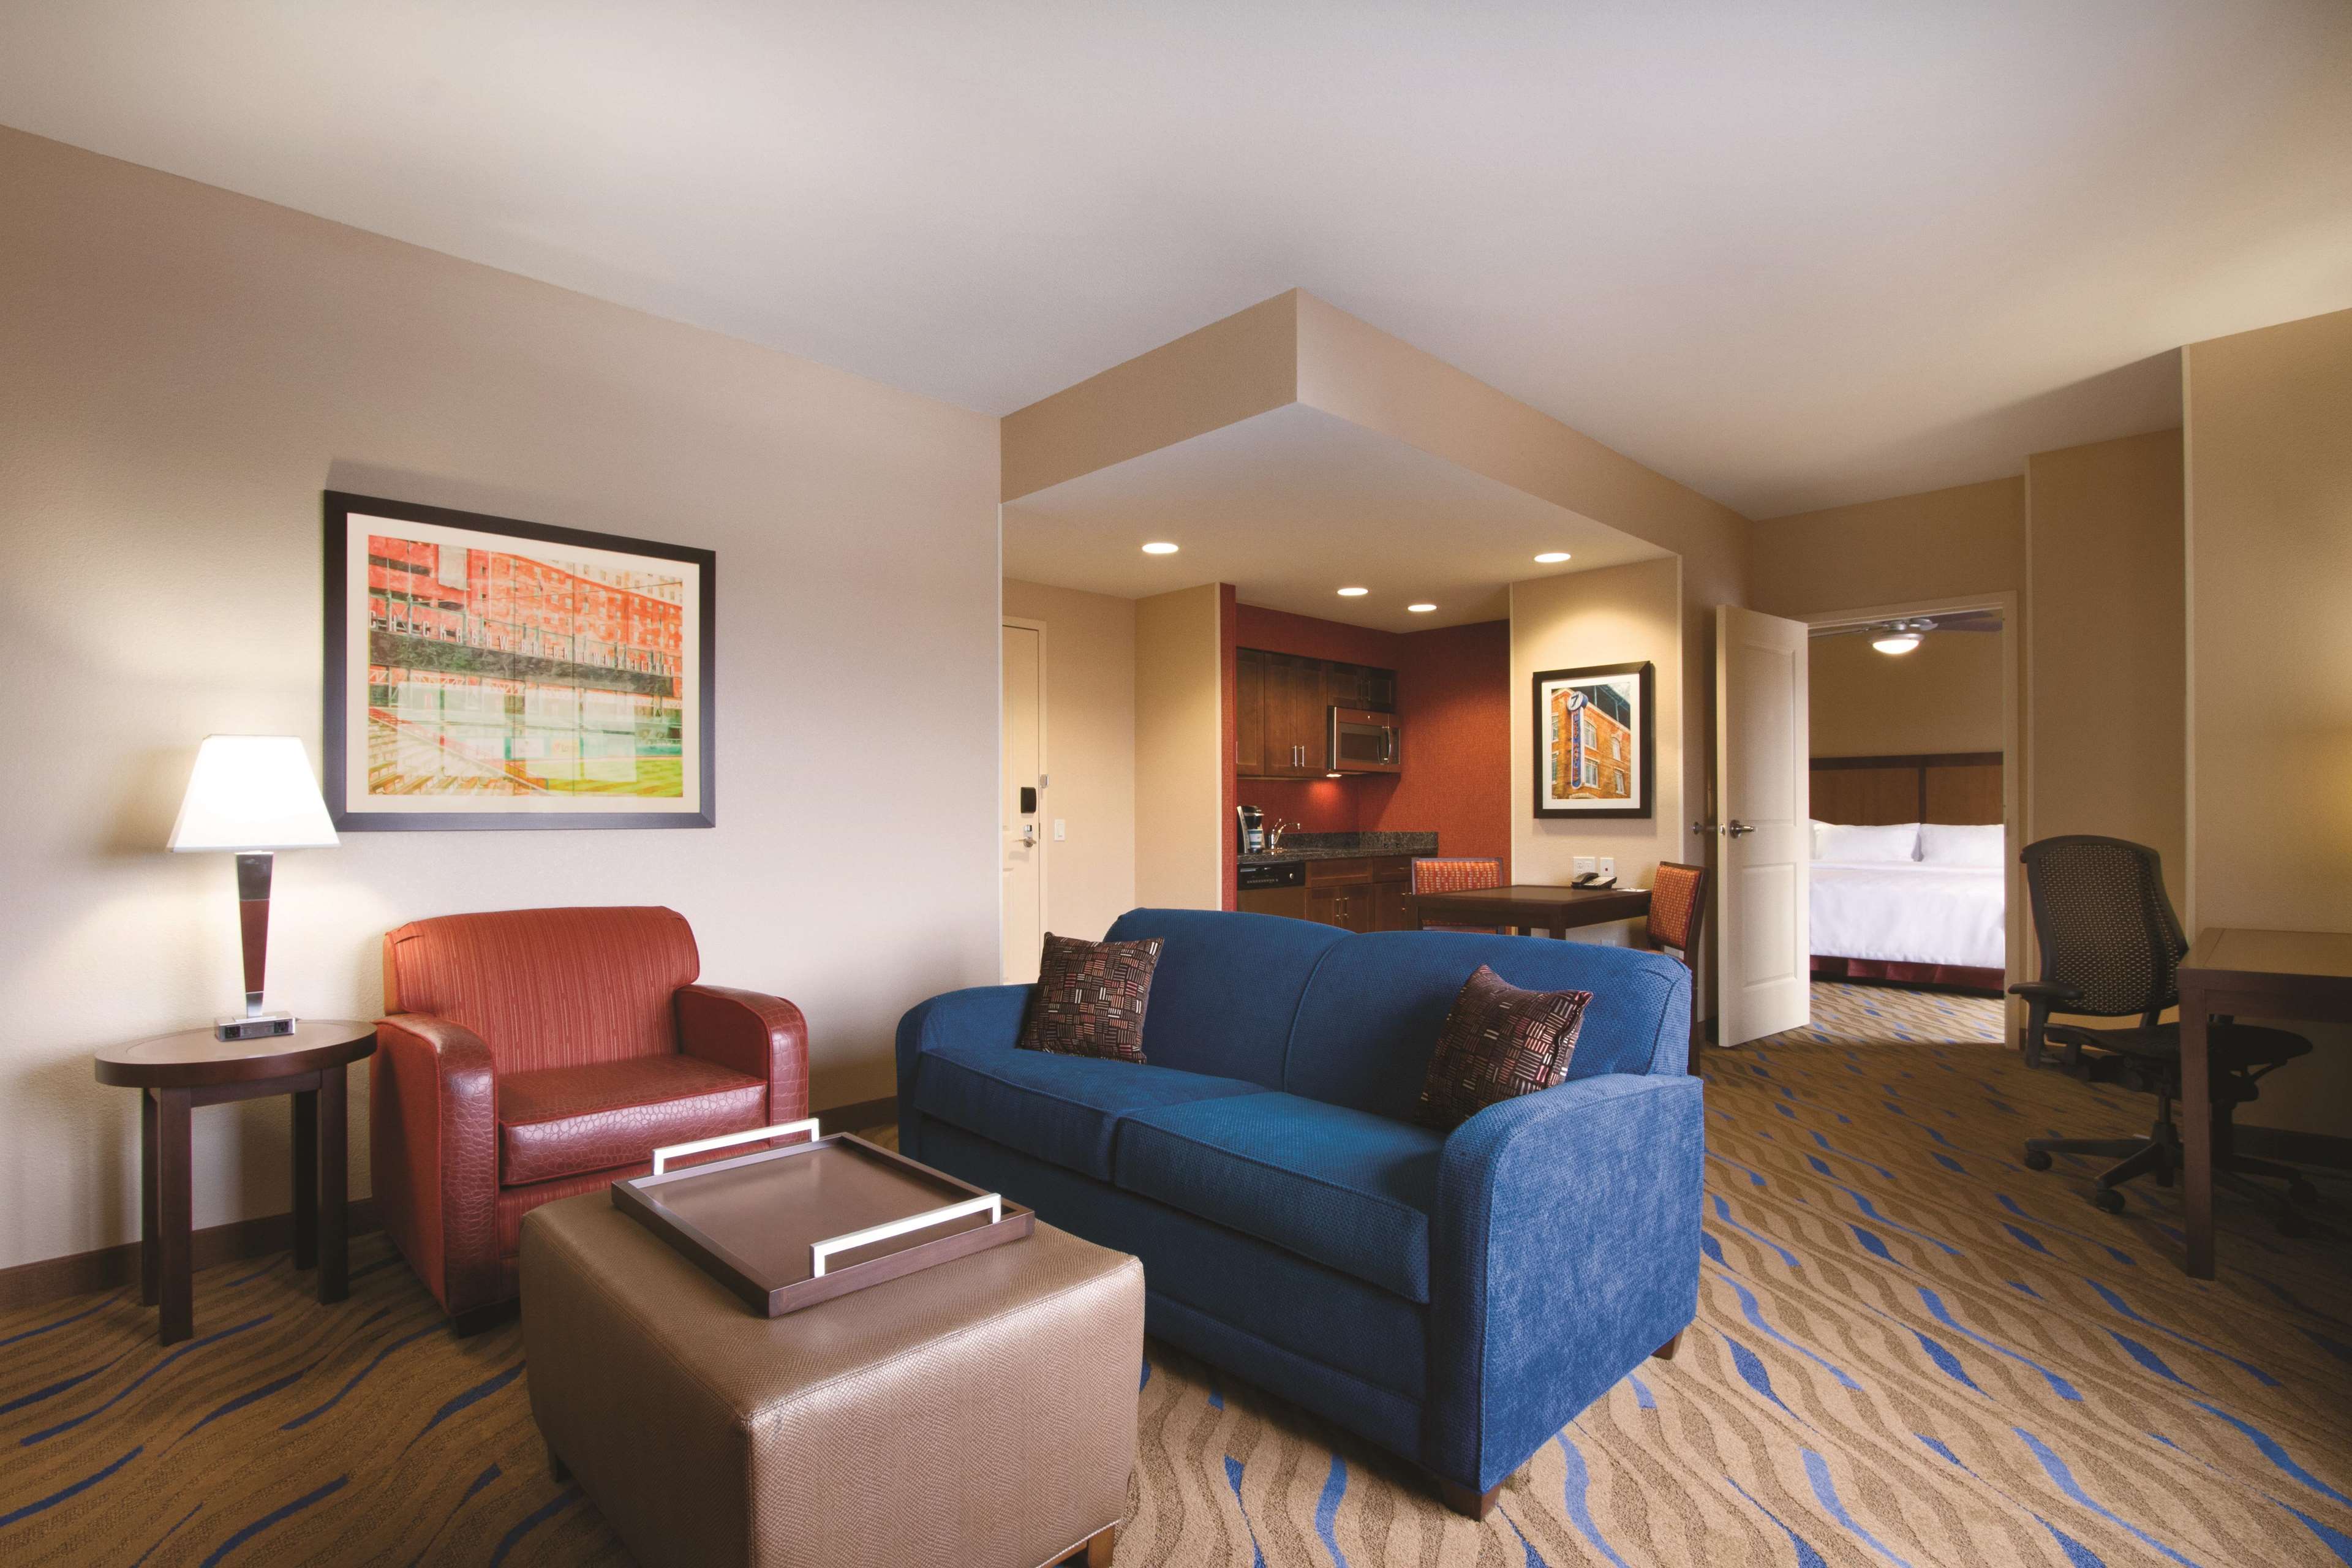 Homewood Suites by Hilton Oklahoma City-Bricktown, OK Photo